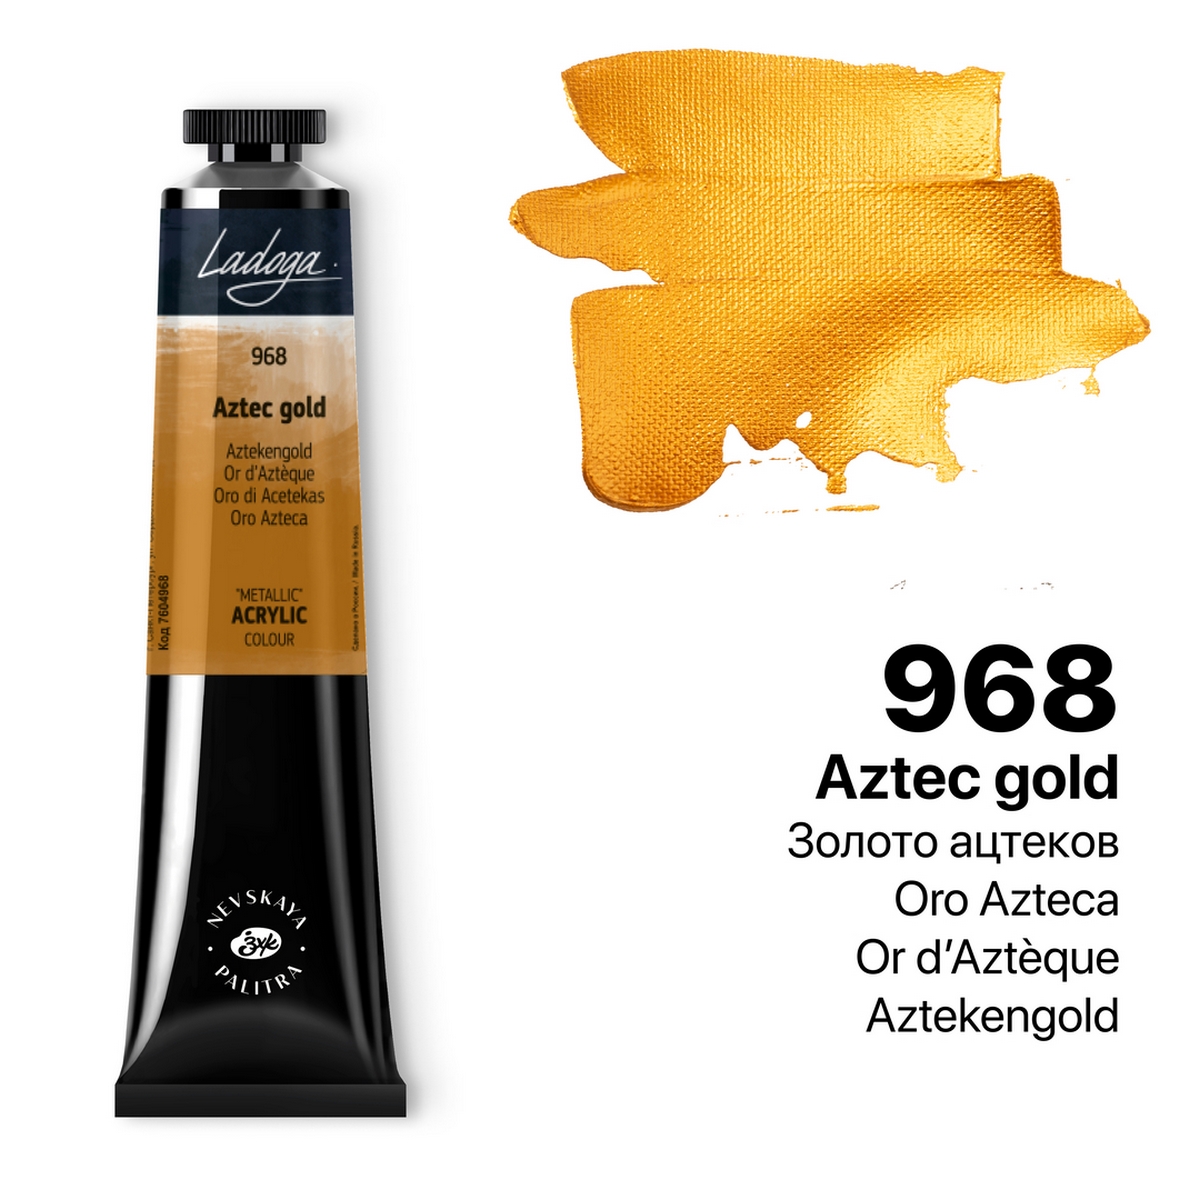 Acrylic colour Ladoga, Aztec gold Metallic, № 968